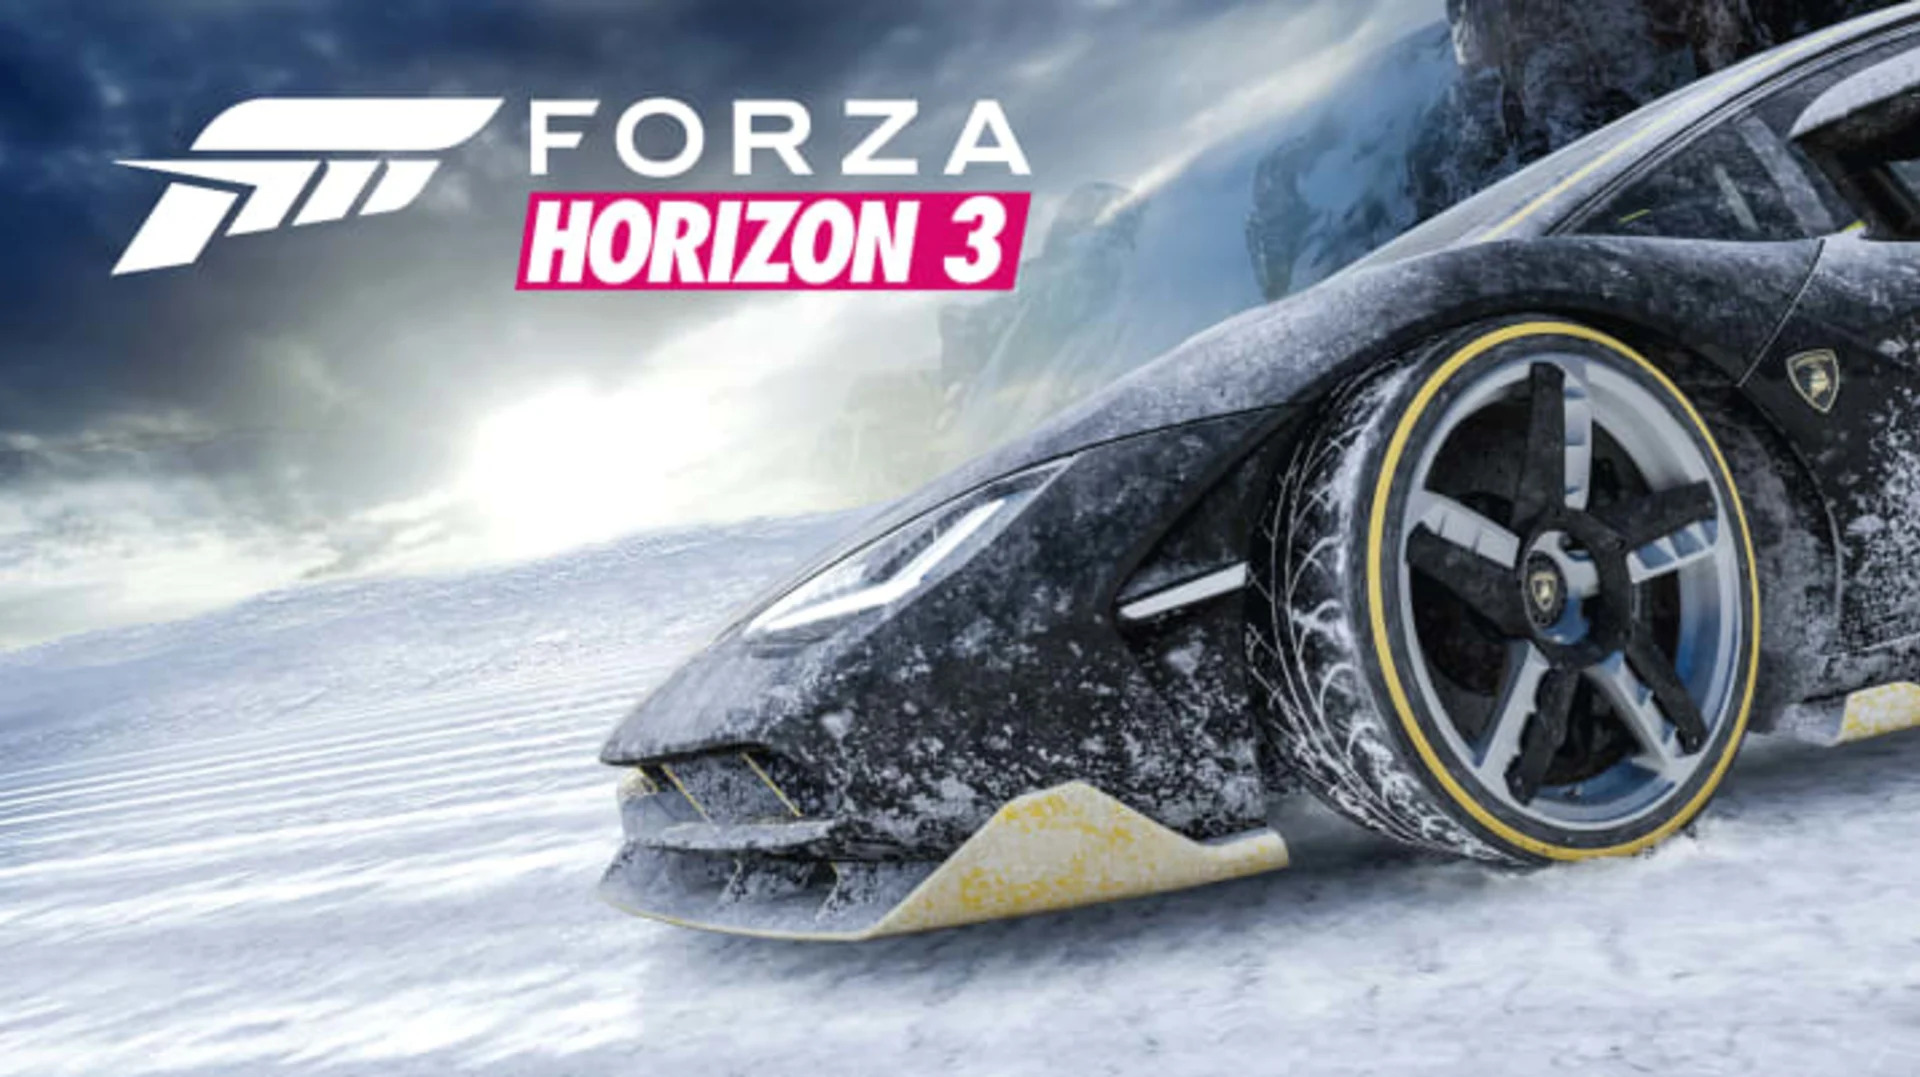 Forza Horizon 3 expansion pack teaser image